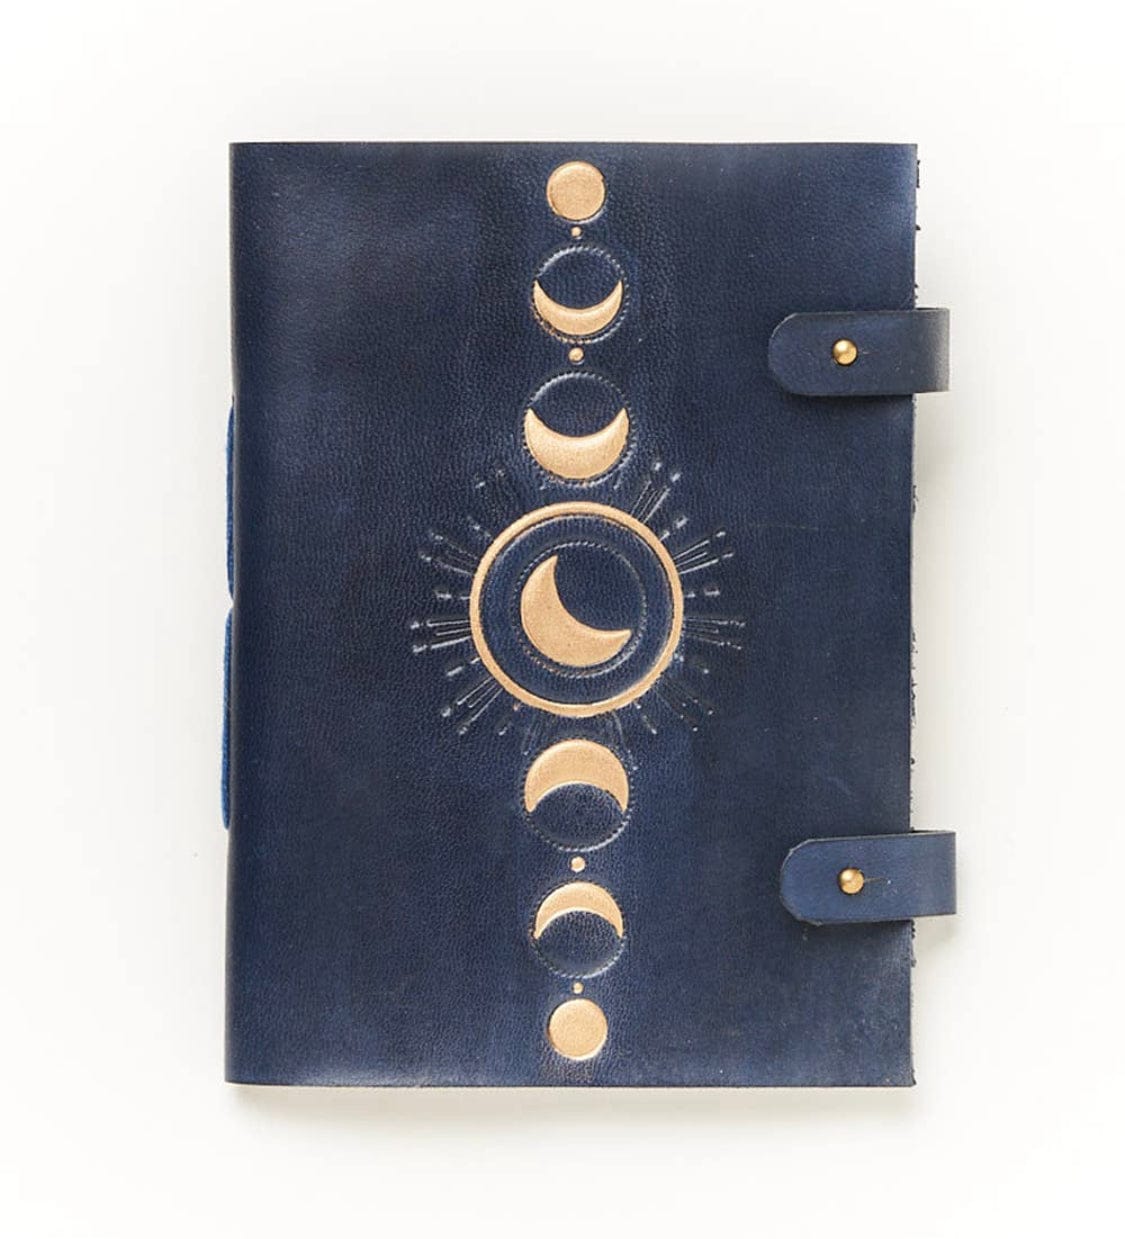 Indulka Crescent Moon Leather Journal